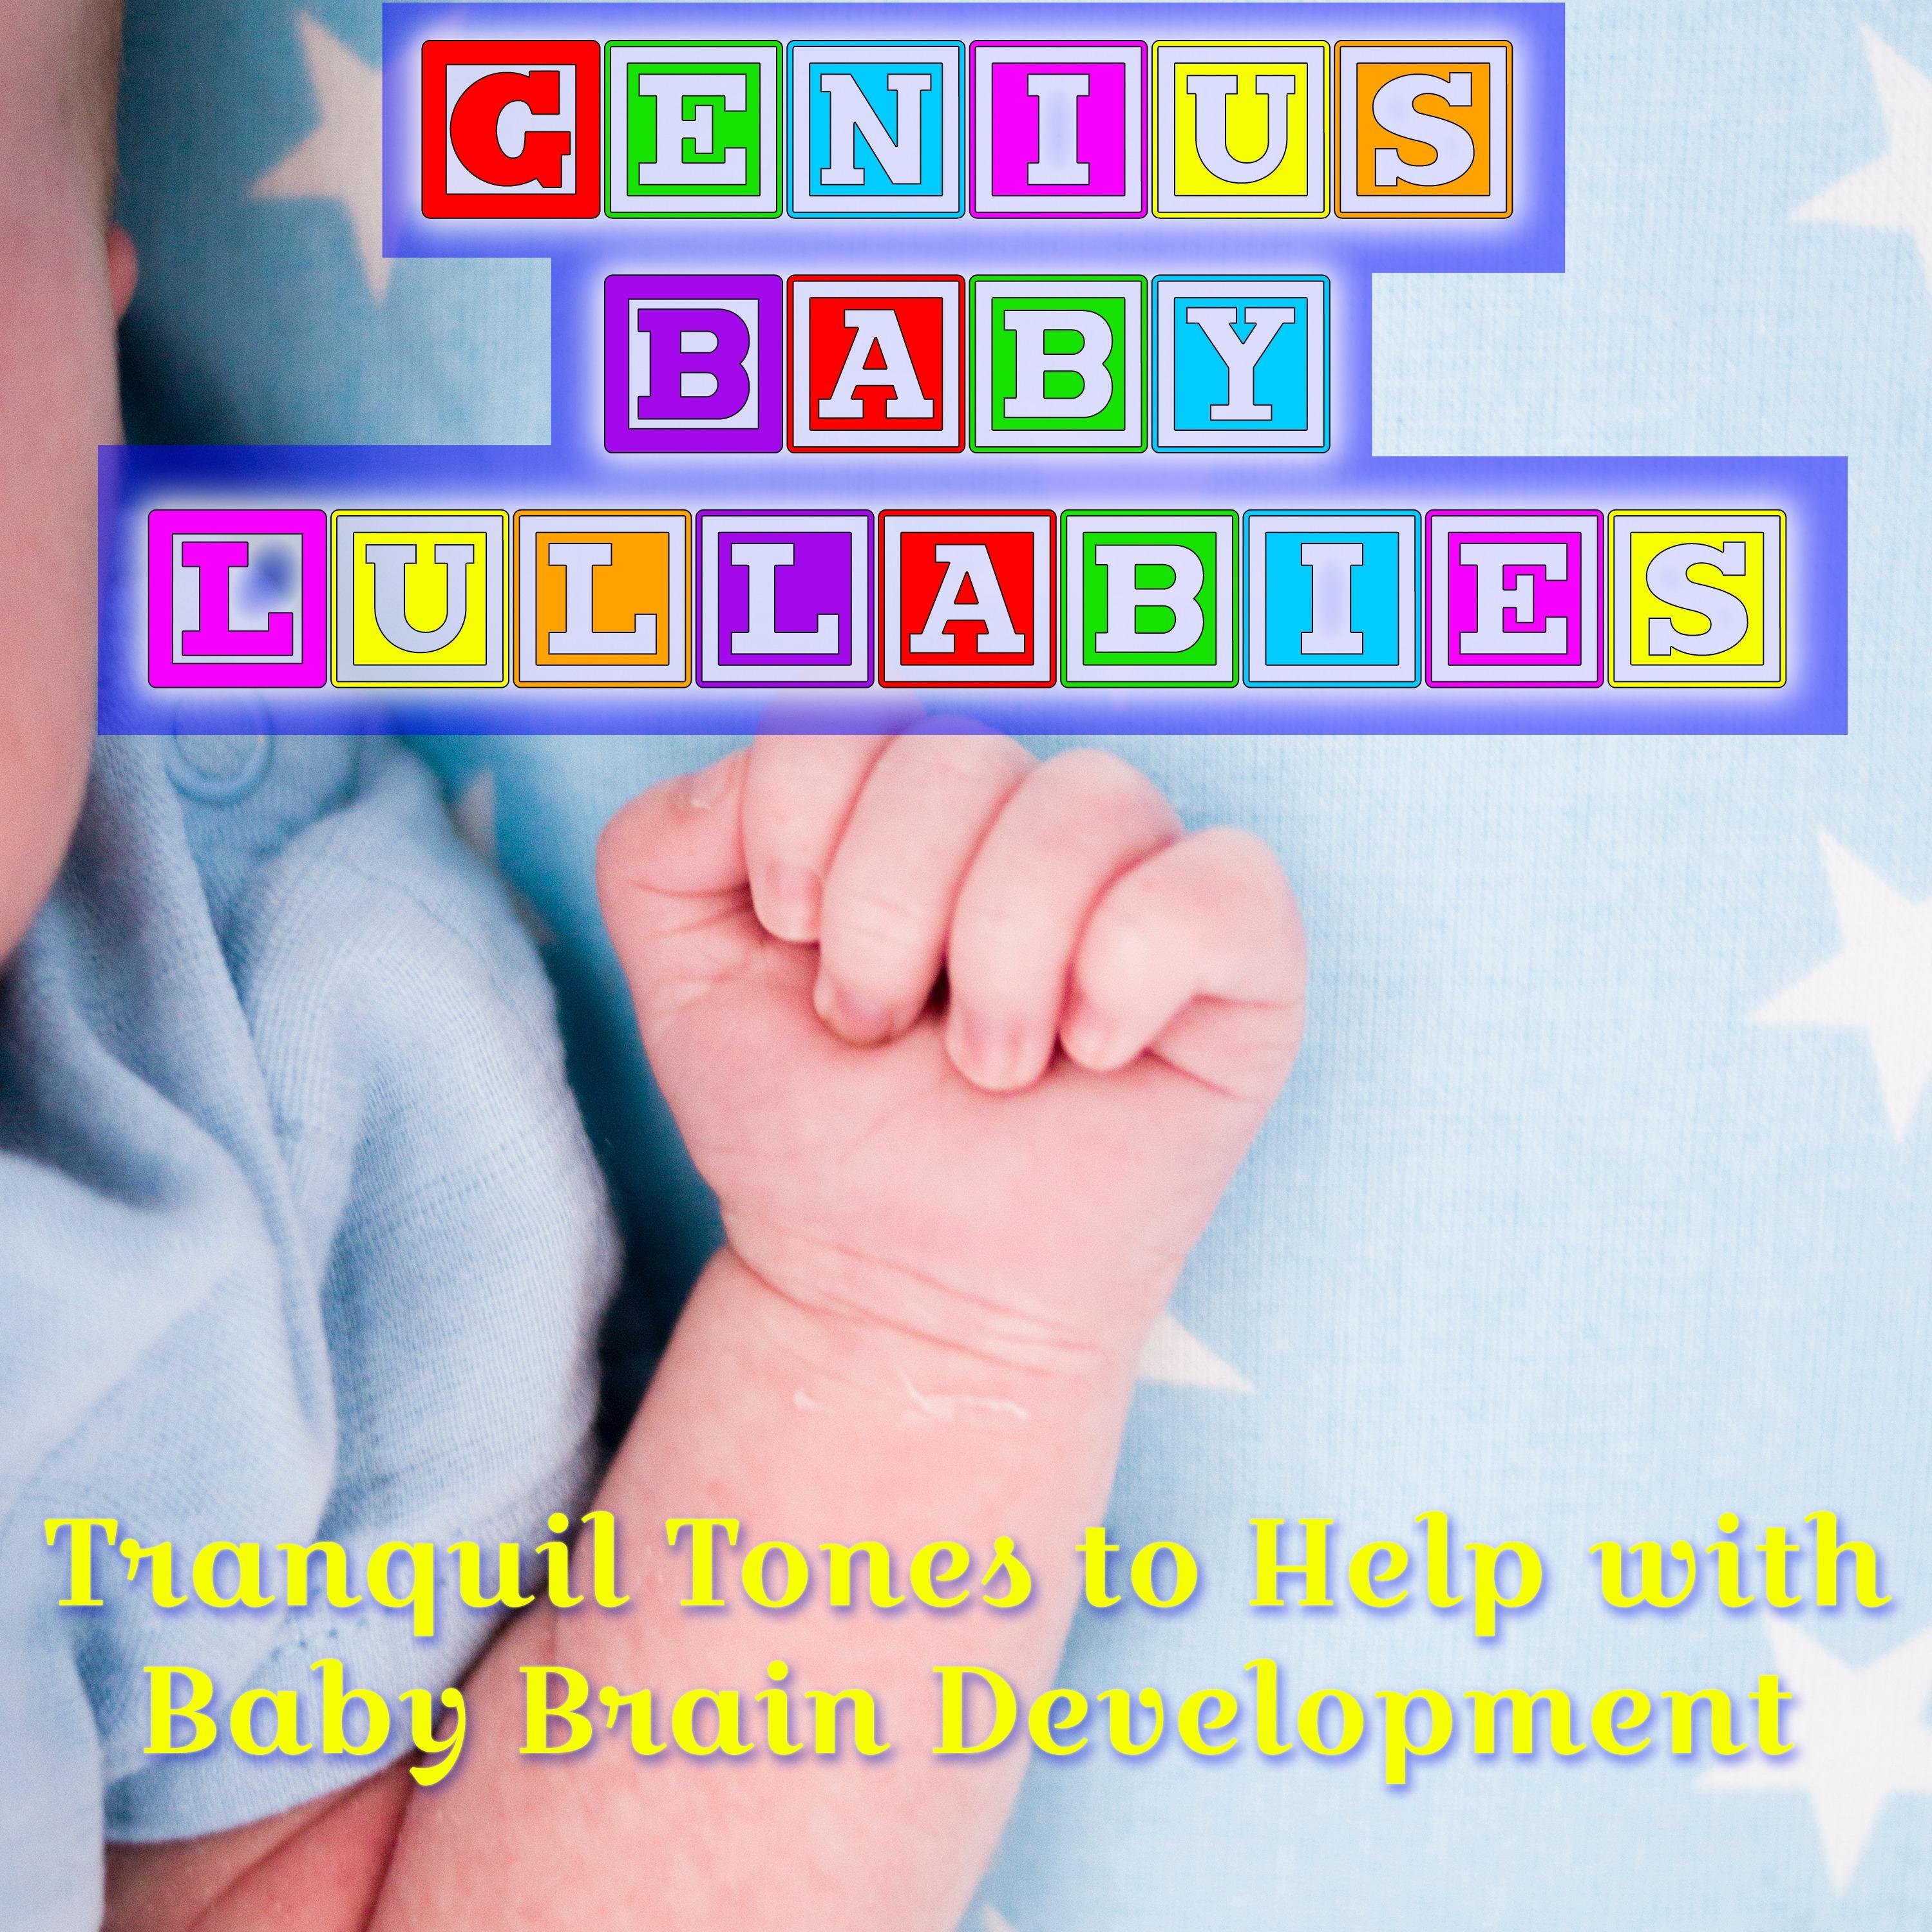 Genius Baby Lullabies: Tranquil Tones to Help with Baby Brain Development